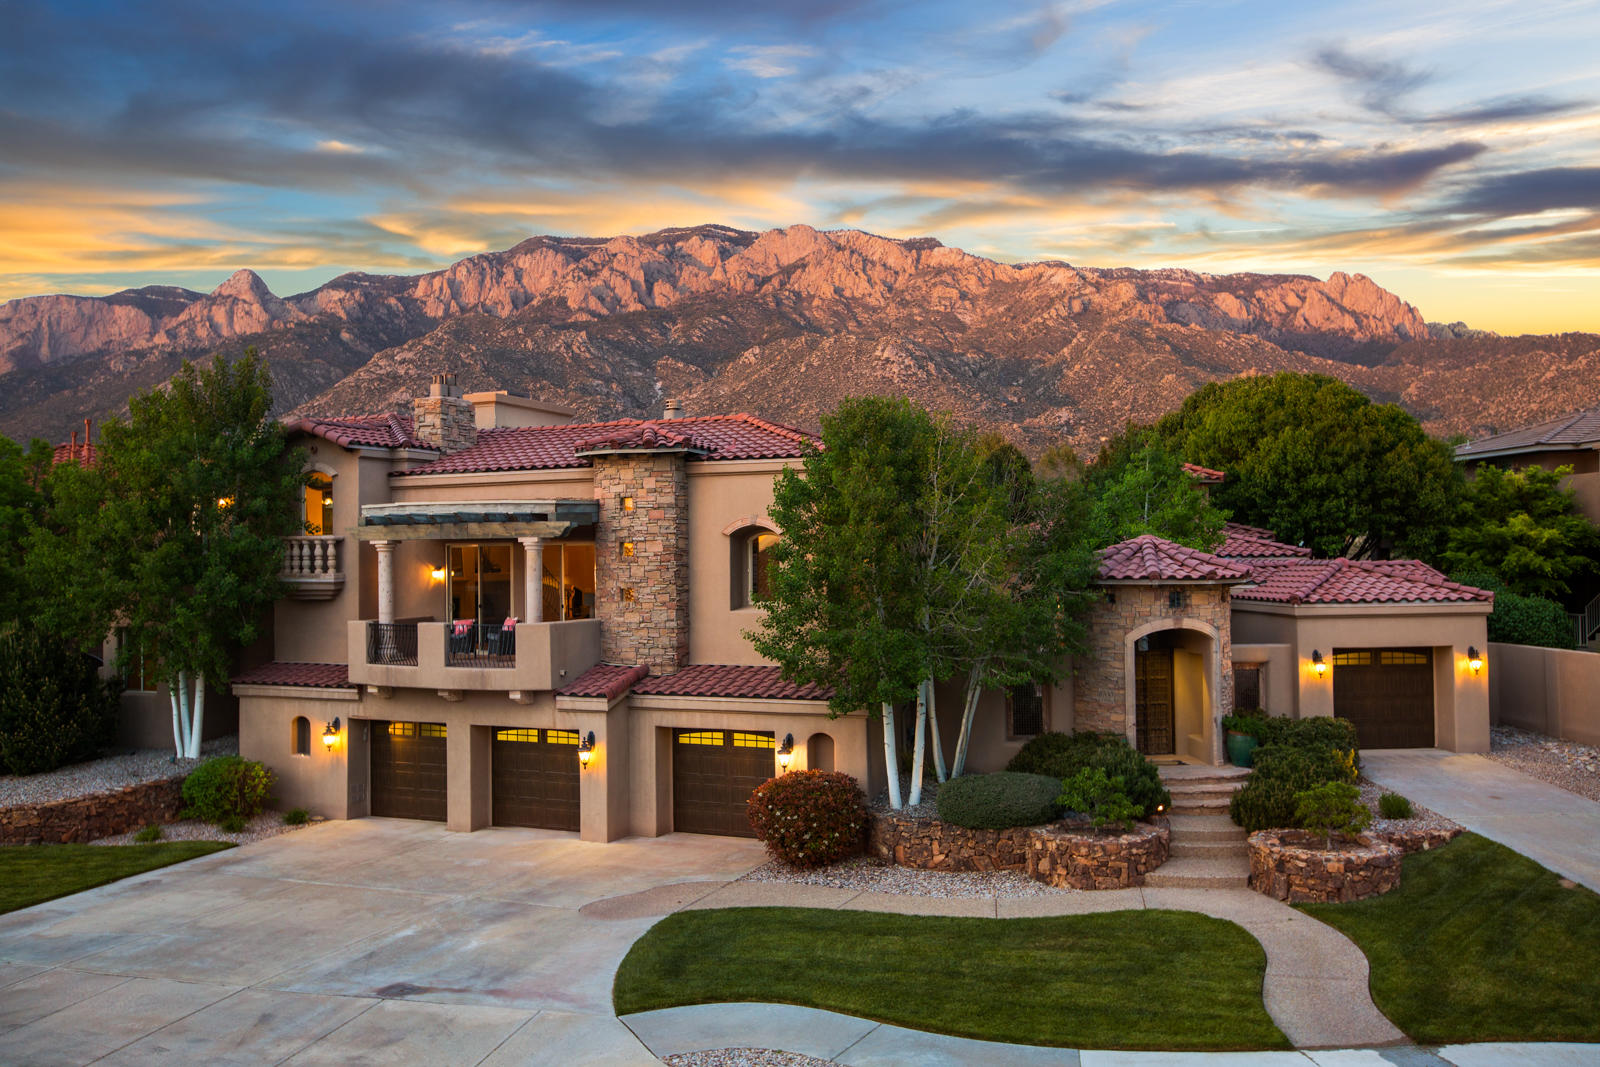 Million Dollar Real Estate & Homes For Sale Albuquerque NM